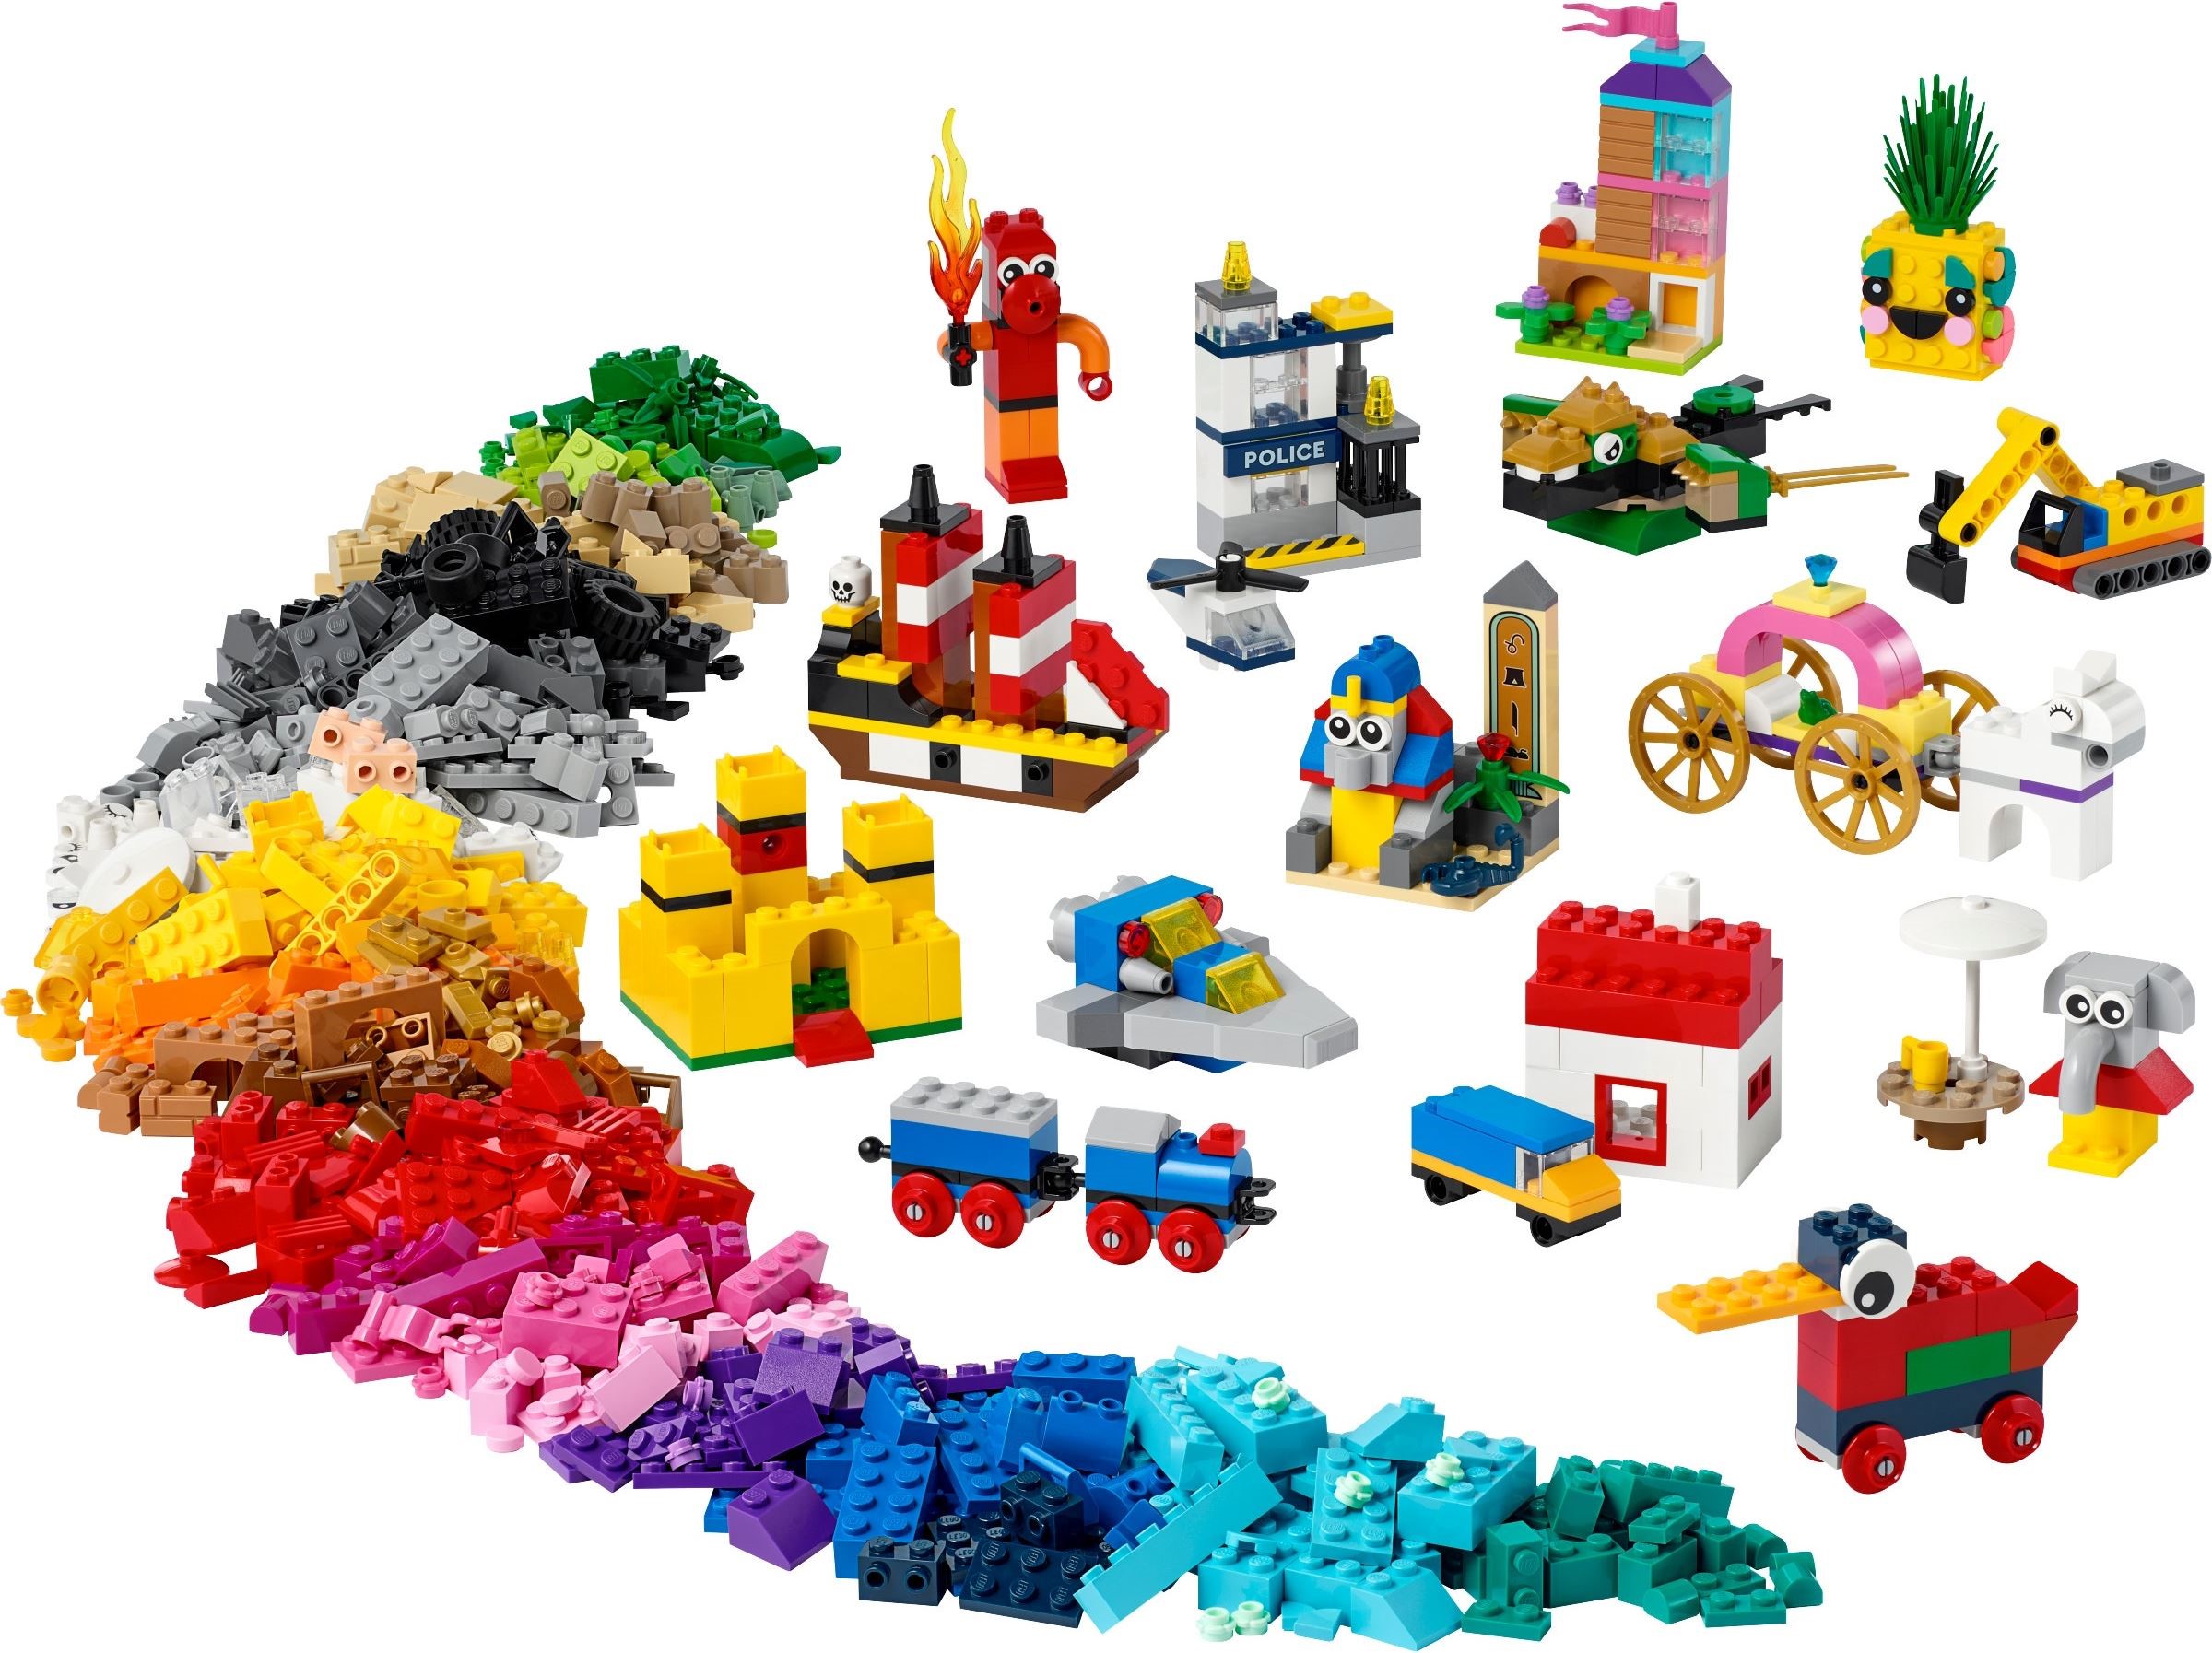 LEGO® Classic 11021 - 90 Jahre Spielspaß